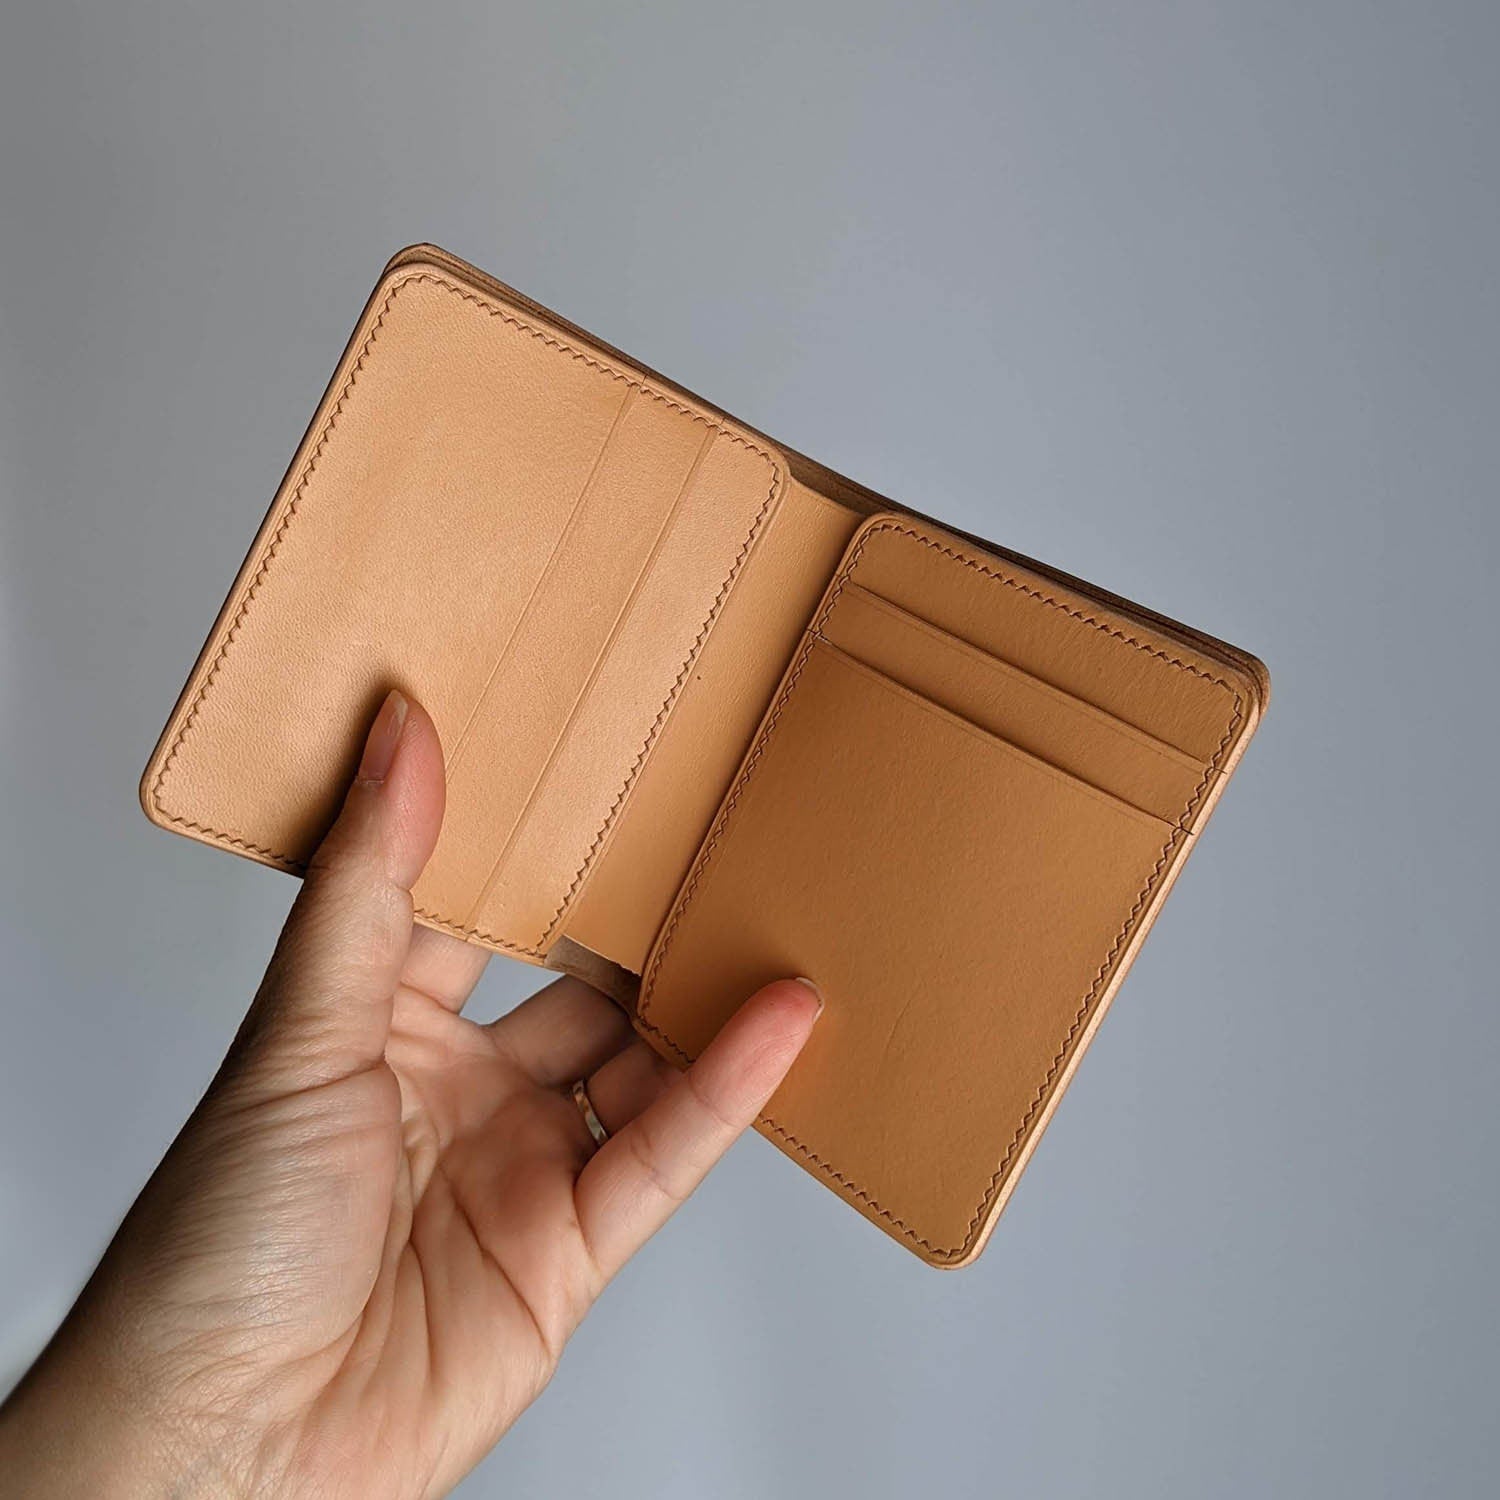 Wallet pocket - How Do I Do That? 